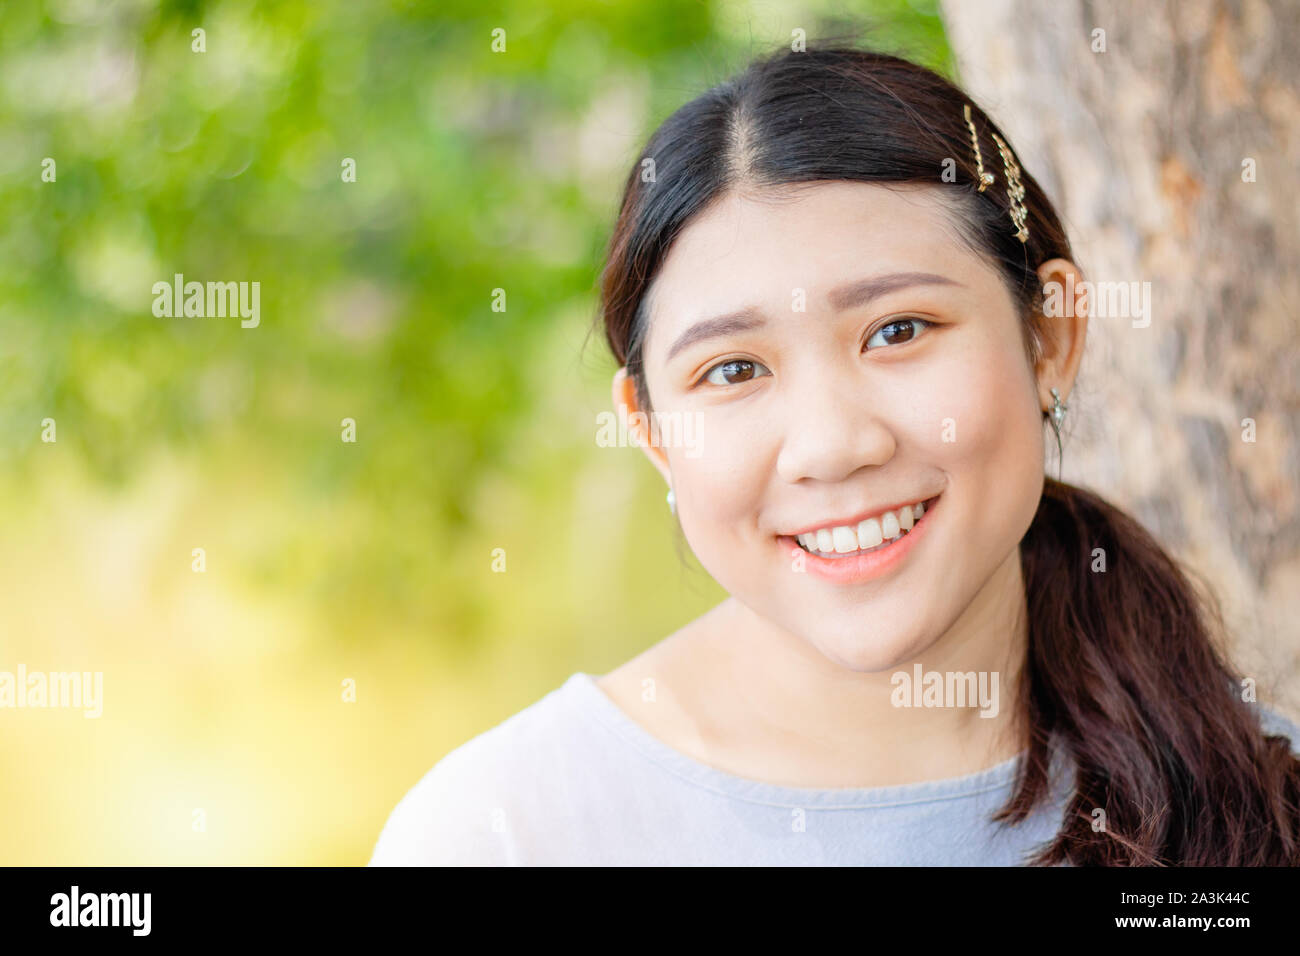 Belle innocents cute girl smiling dents sain forme corpulent race asiatique outdoor vert nature. Banque D'Images